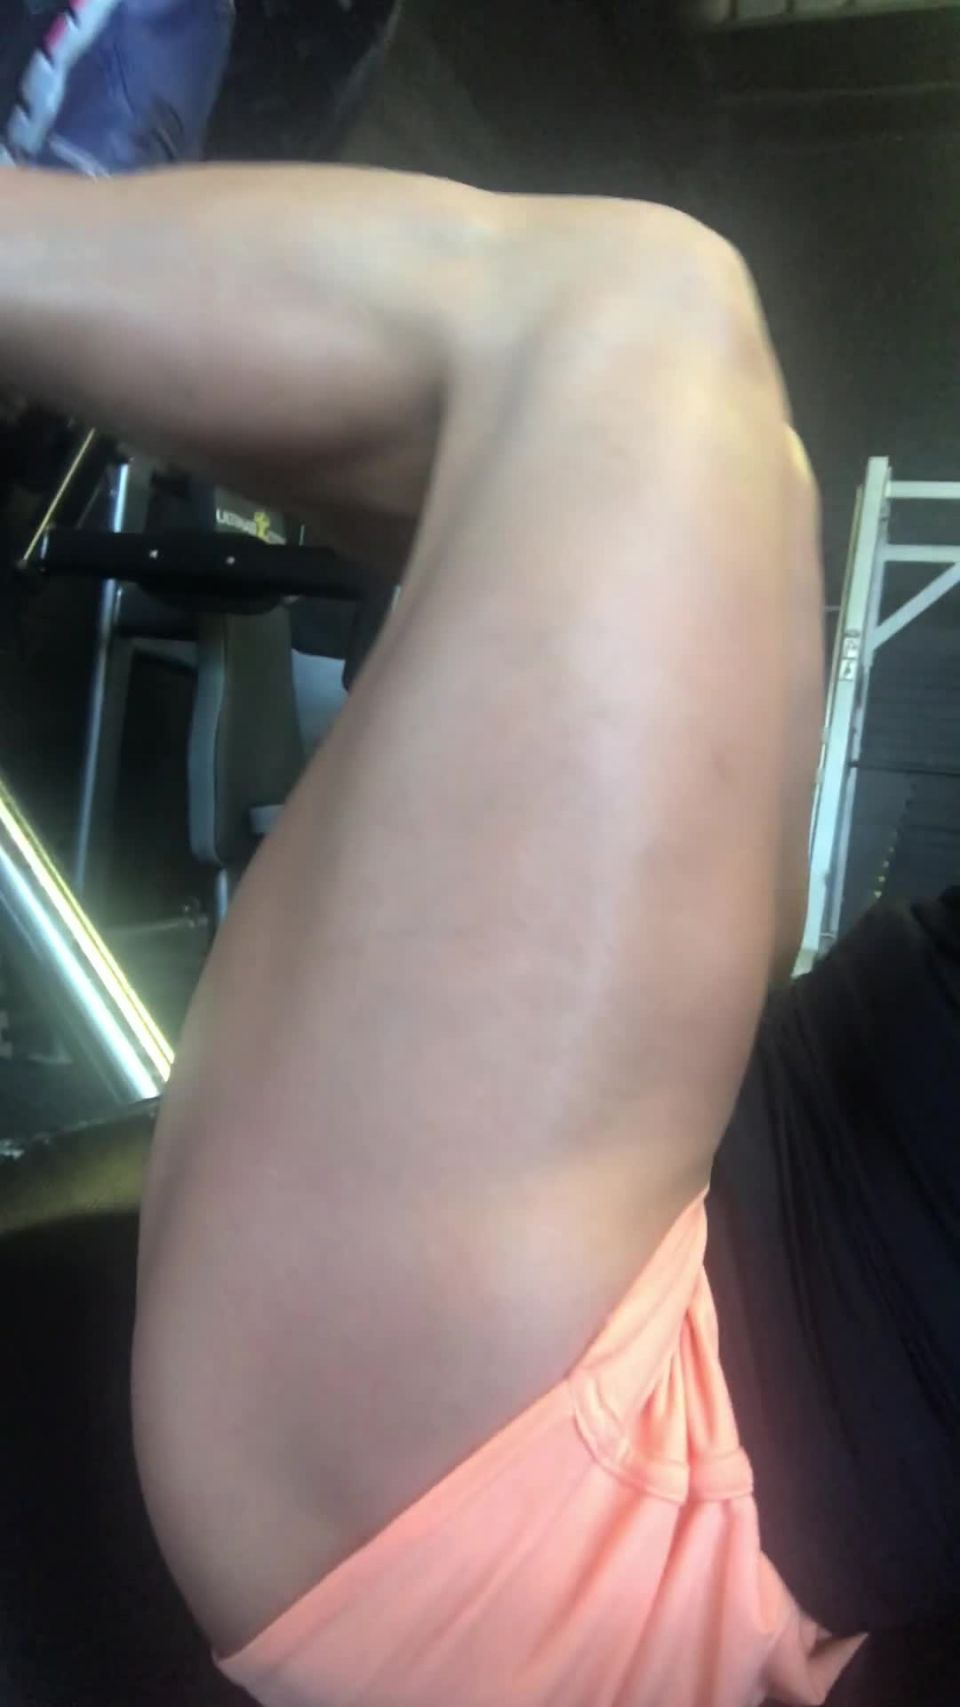 Julie Pereira - juliepereirapt () Juliepereirapt - everyday is leg n ass day in the gym for me multi tasking so my fav 03-07-2018